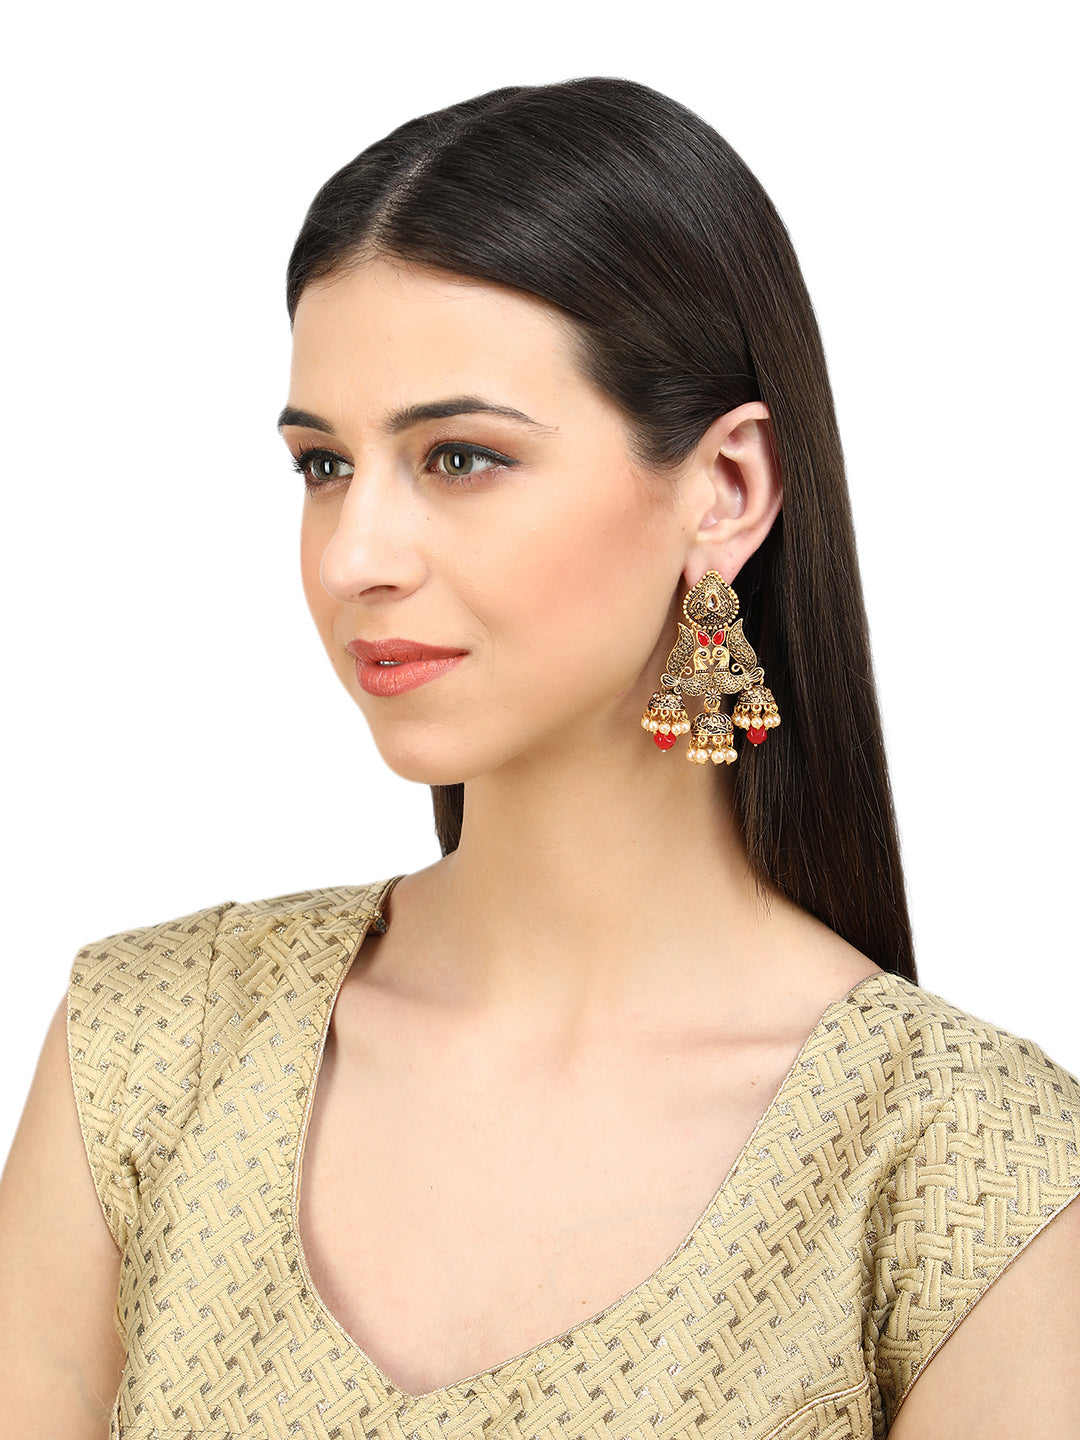 Bhagya Lakshmi Gold Plated Earrings - Buy earrings online from Bhagya Lakshmi